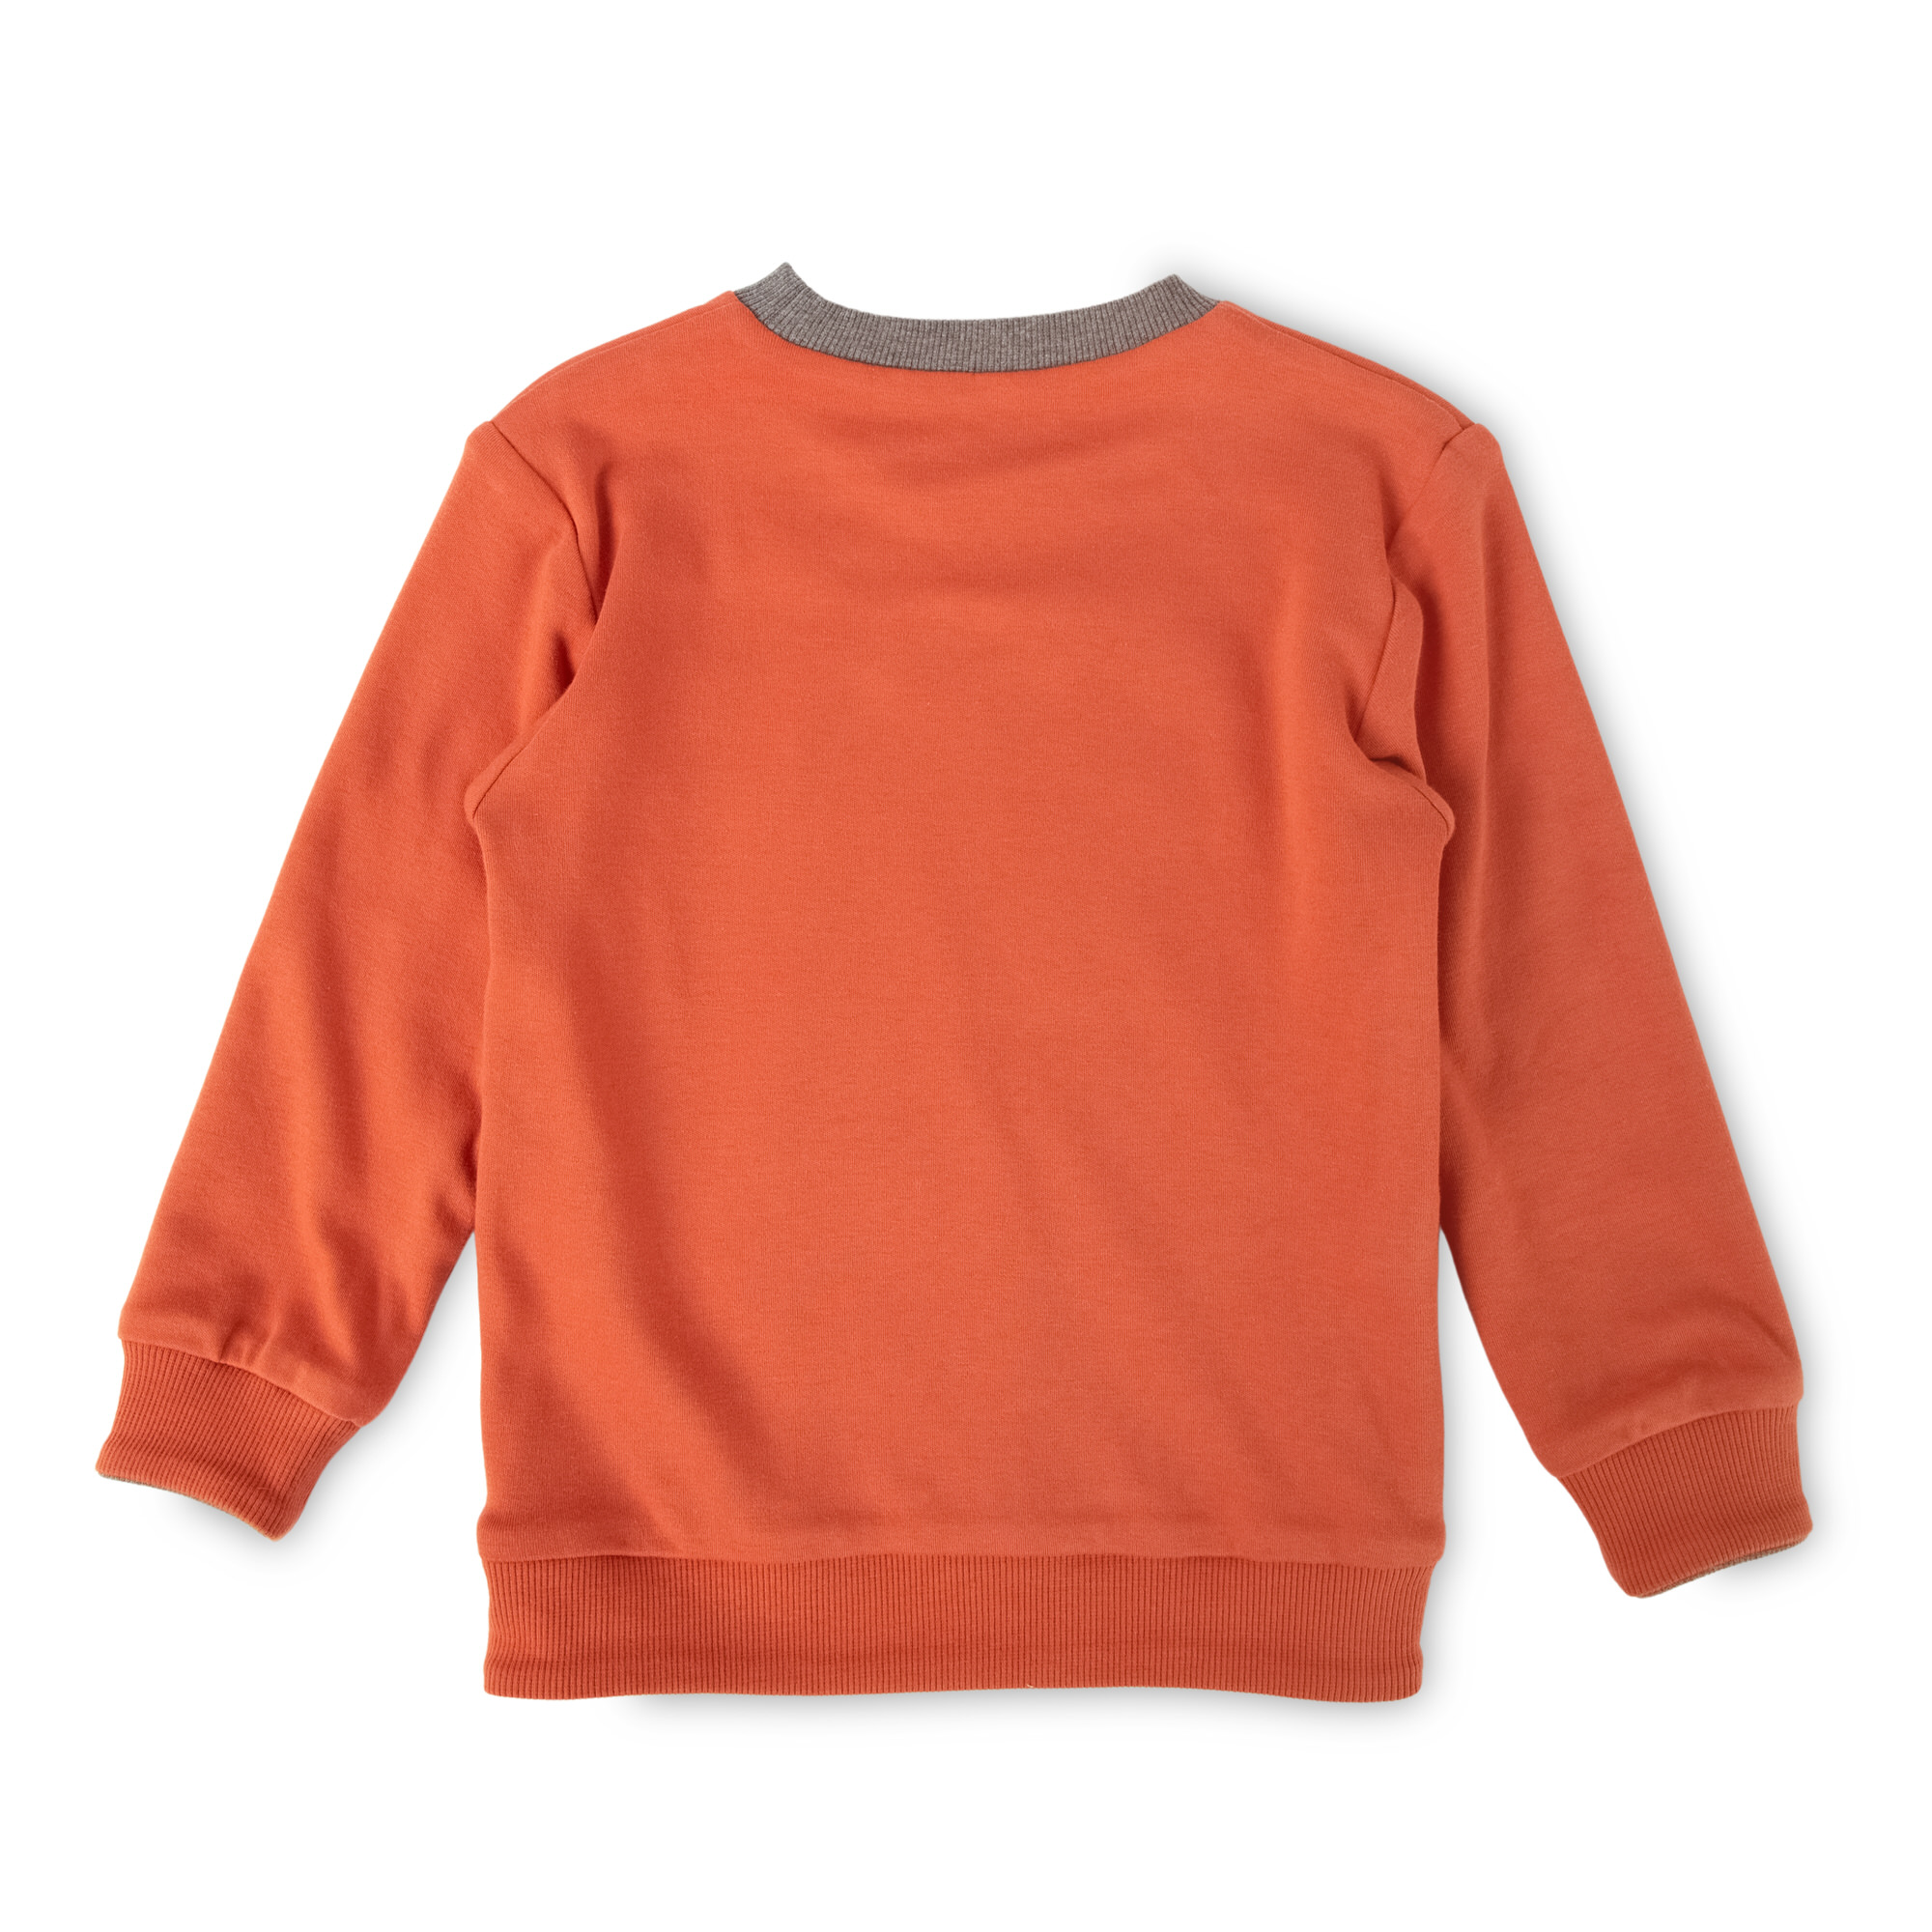 Kinder Wendeshirt, orange oder grau geringelt